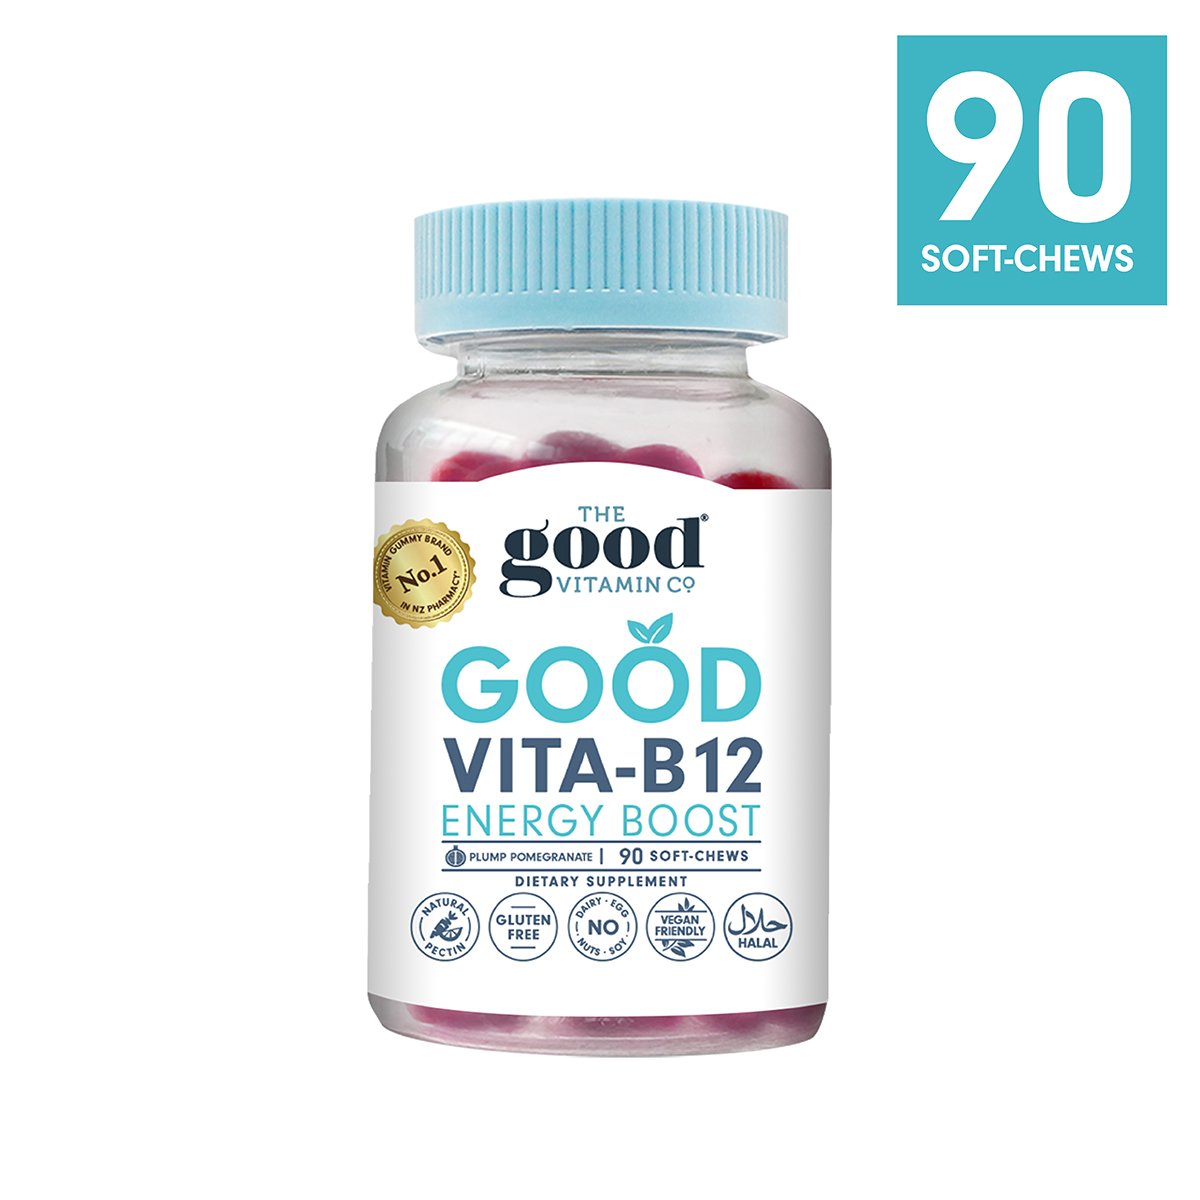 The Good Vitamin CO. Good Vita-B12 Energy Boost 90 Soft-Chews.